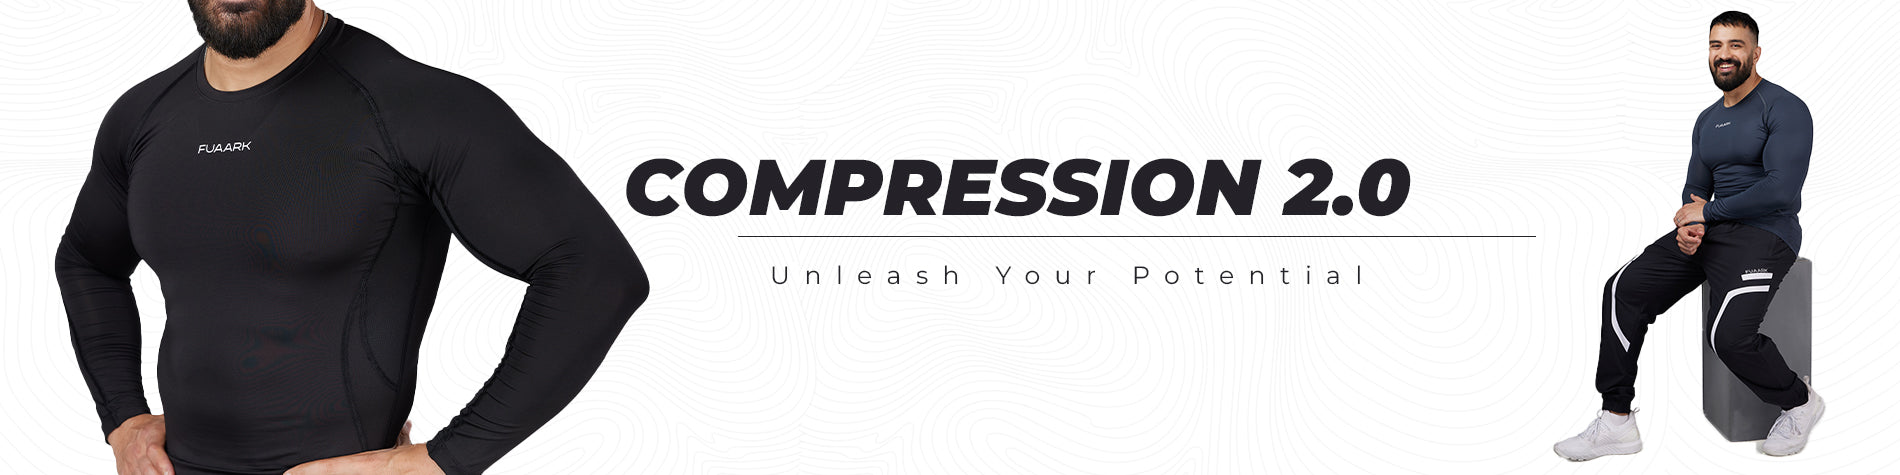 Compression_plp_banner_2